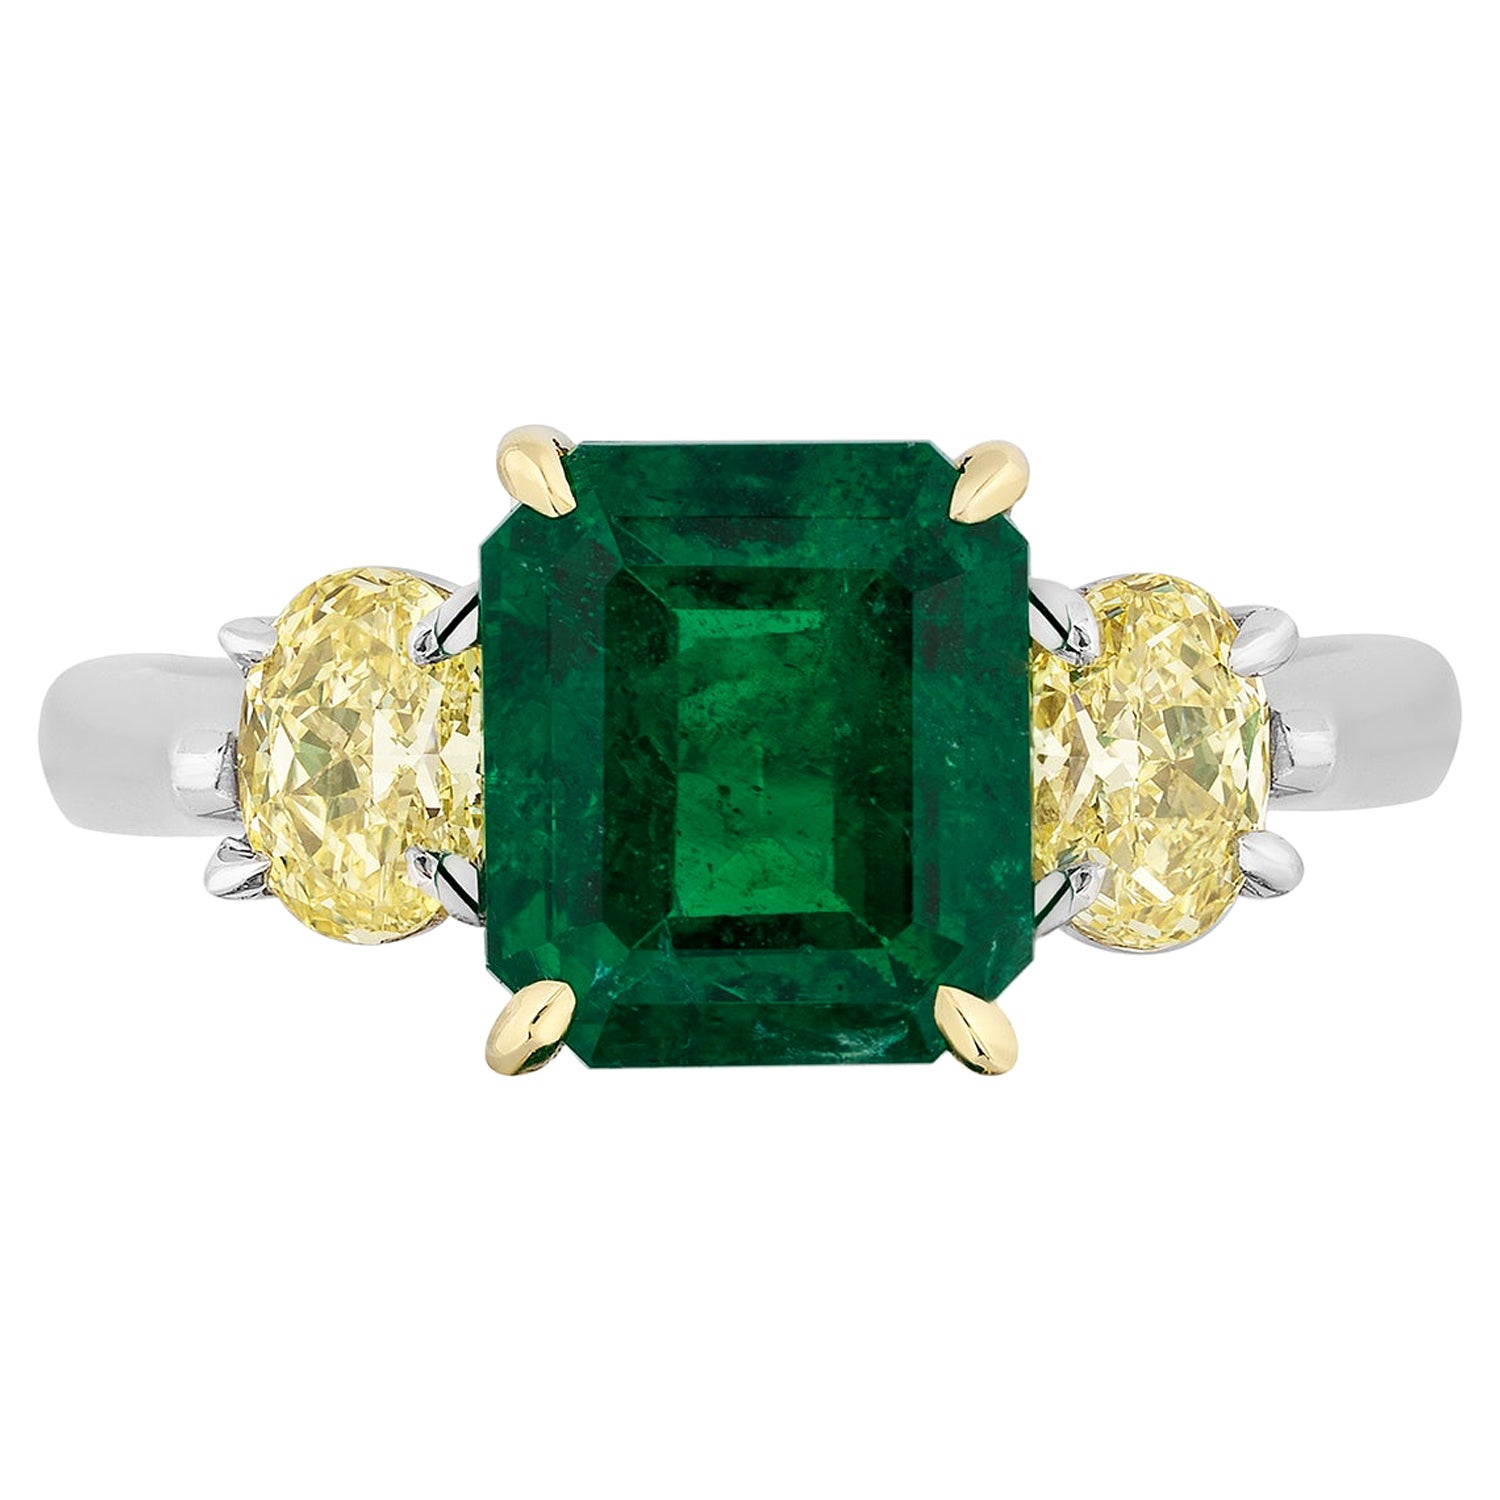 Andreoli 2.96 Carat Zambian Emerald Yellow Diamond Platinum Ring CDC Certified For Sale